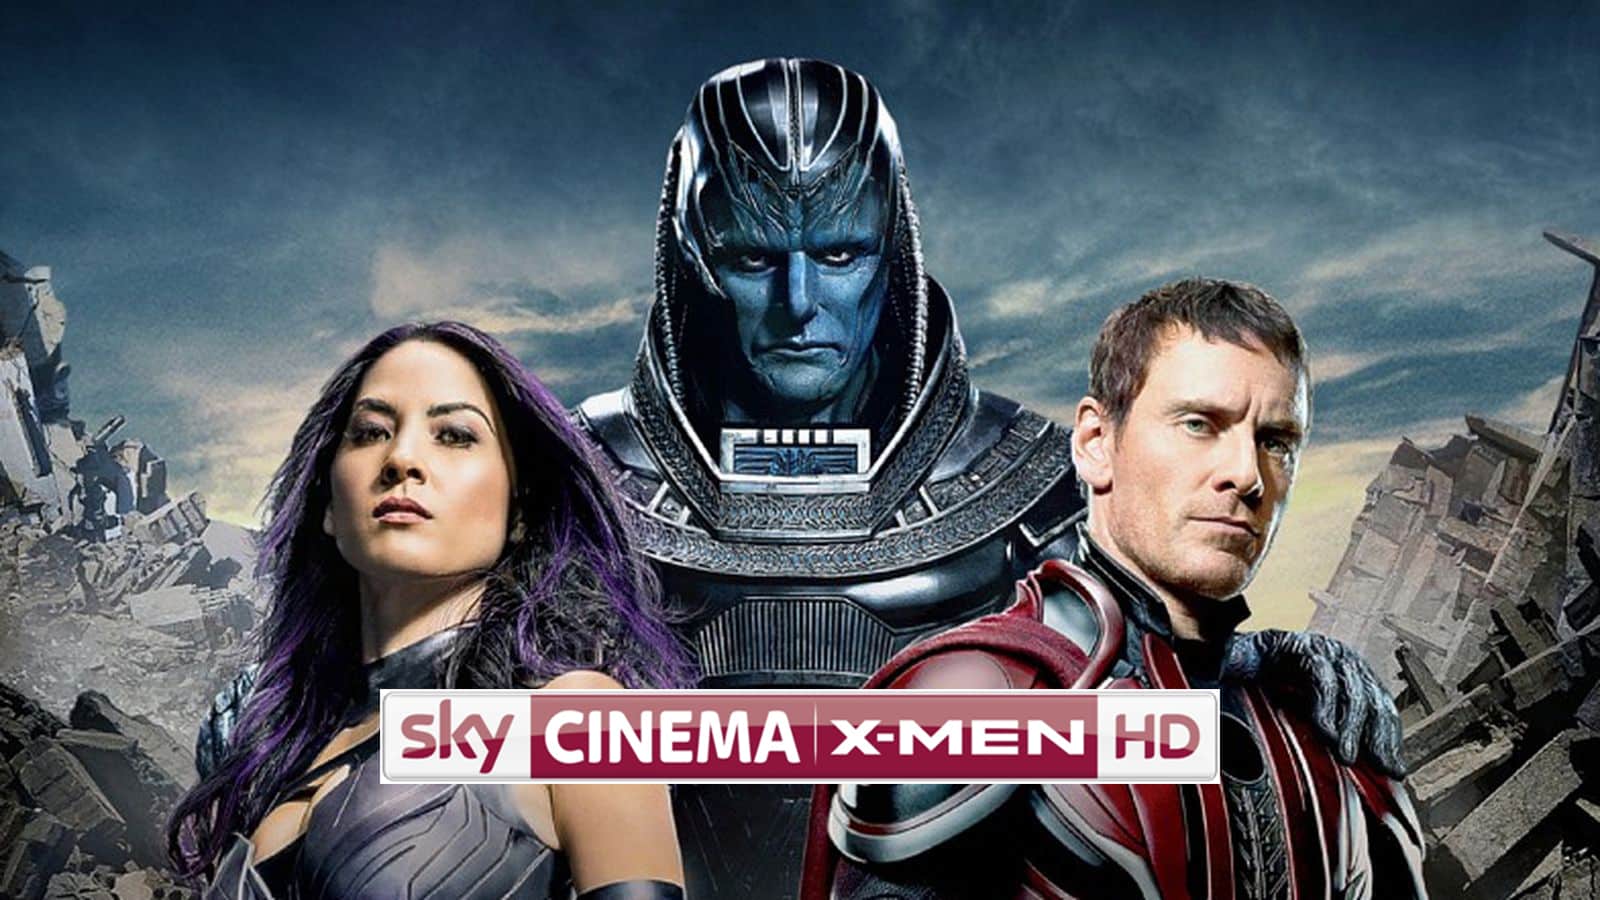 Sky Cinema X-Men HD: arriva il canale dedicato ai film sui supereroi Marvel Comics